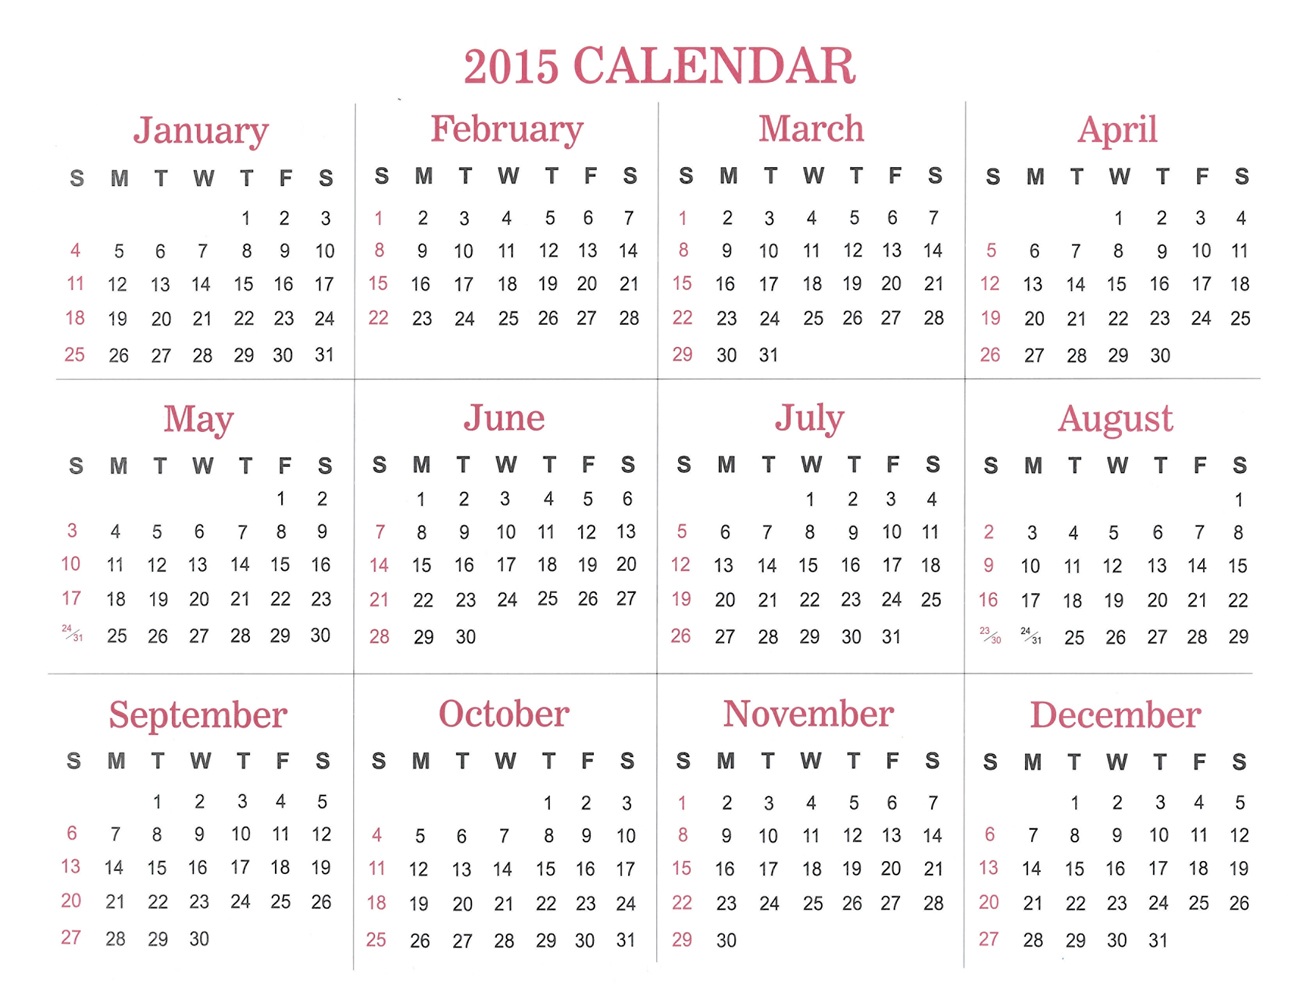 Back Cover: 2014 The Peoples Gospel Hour Calendar